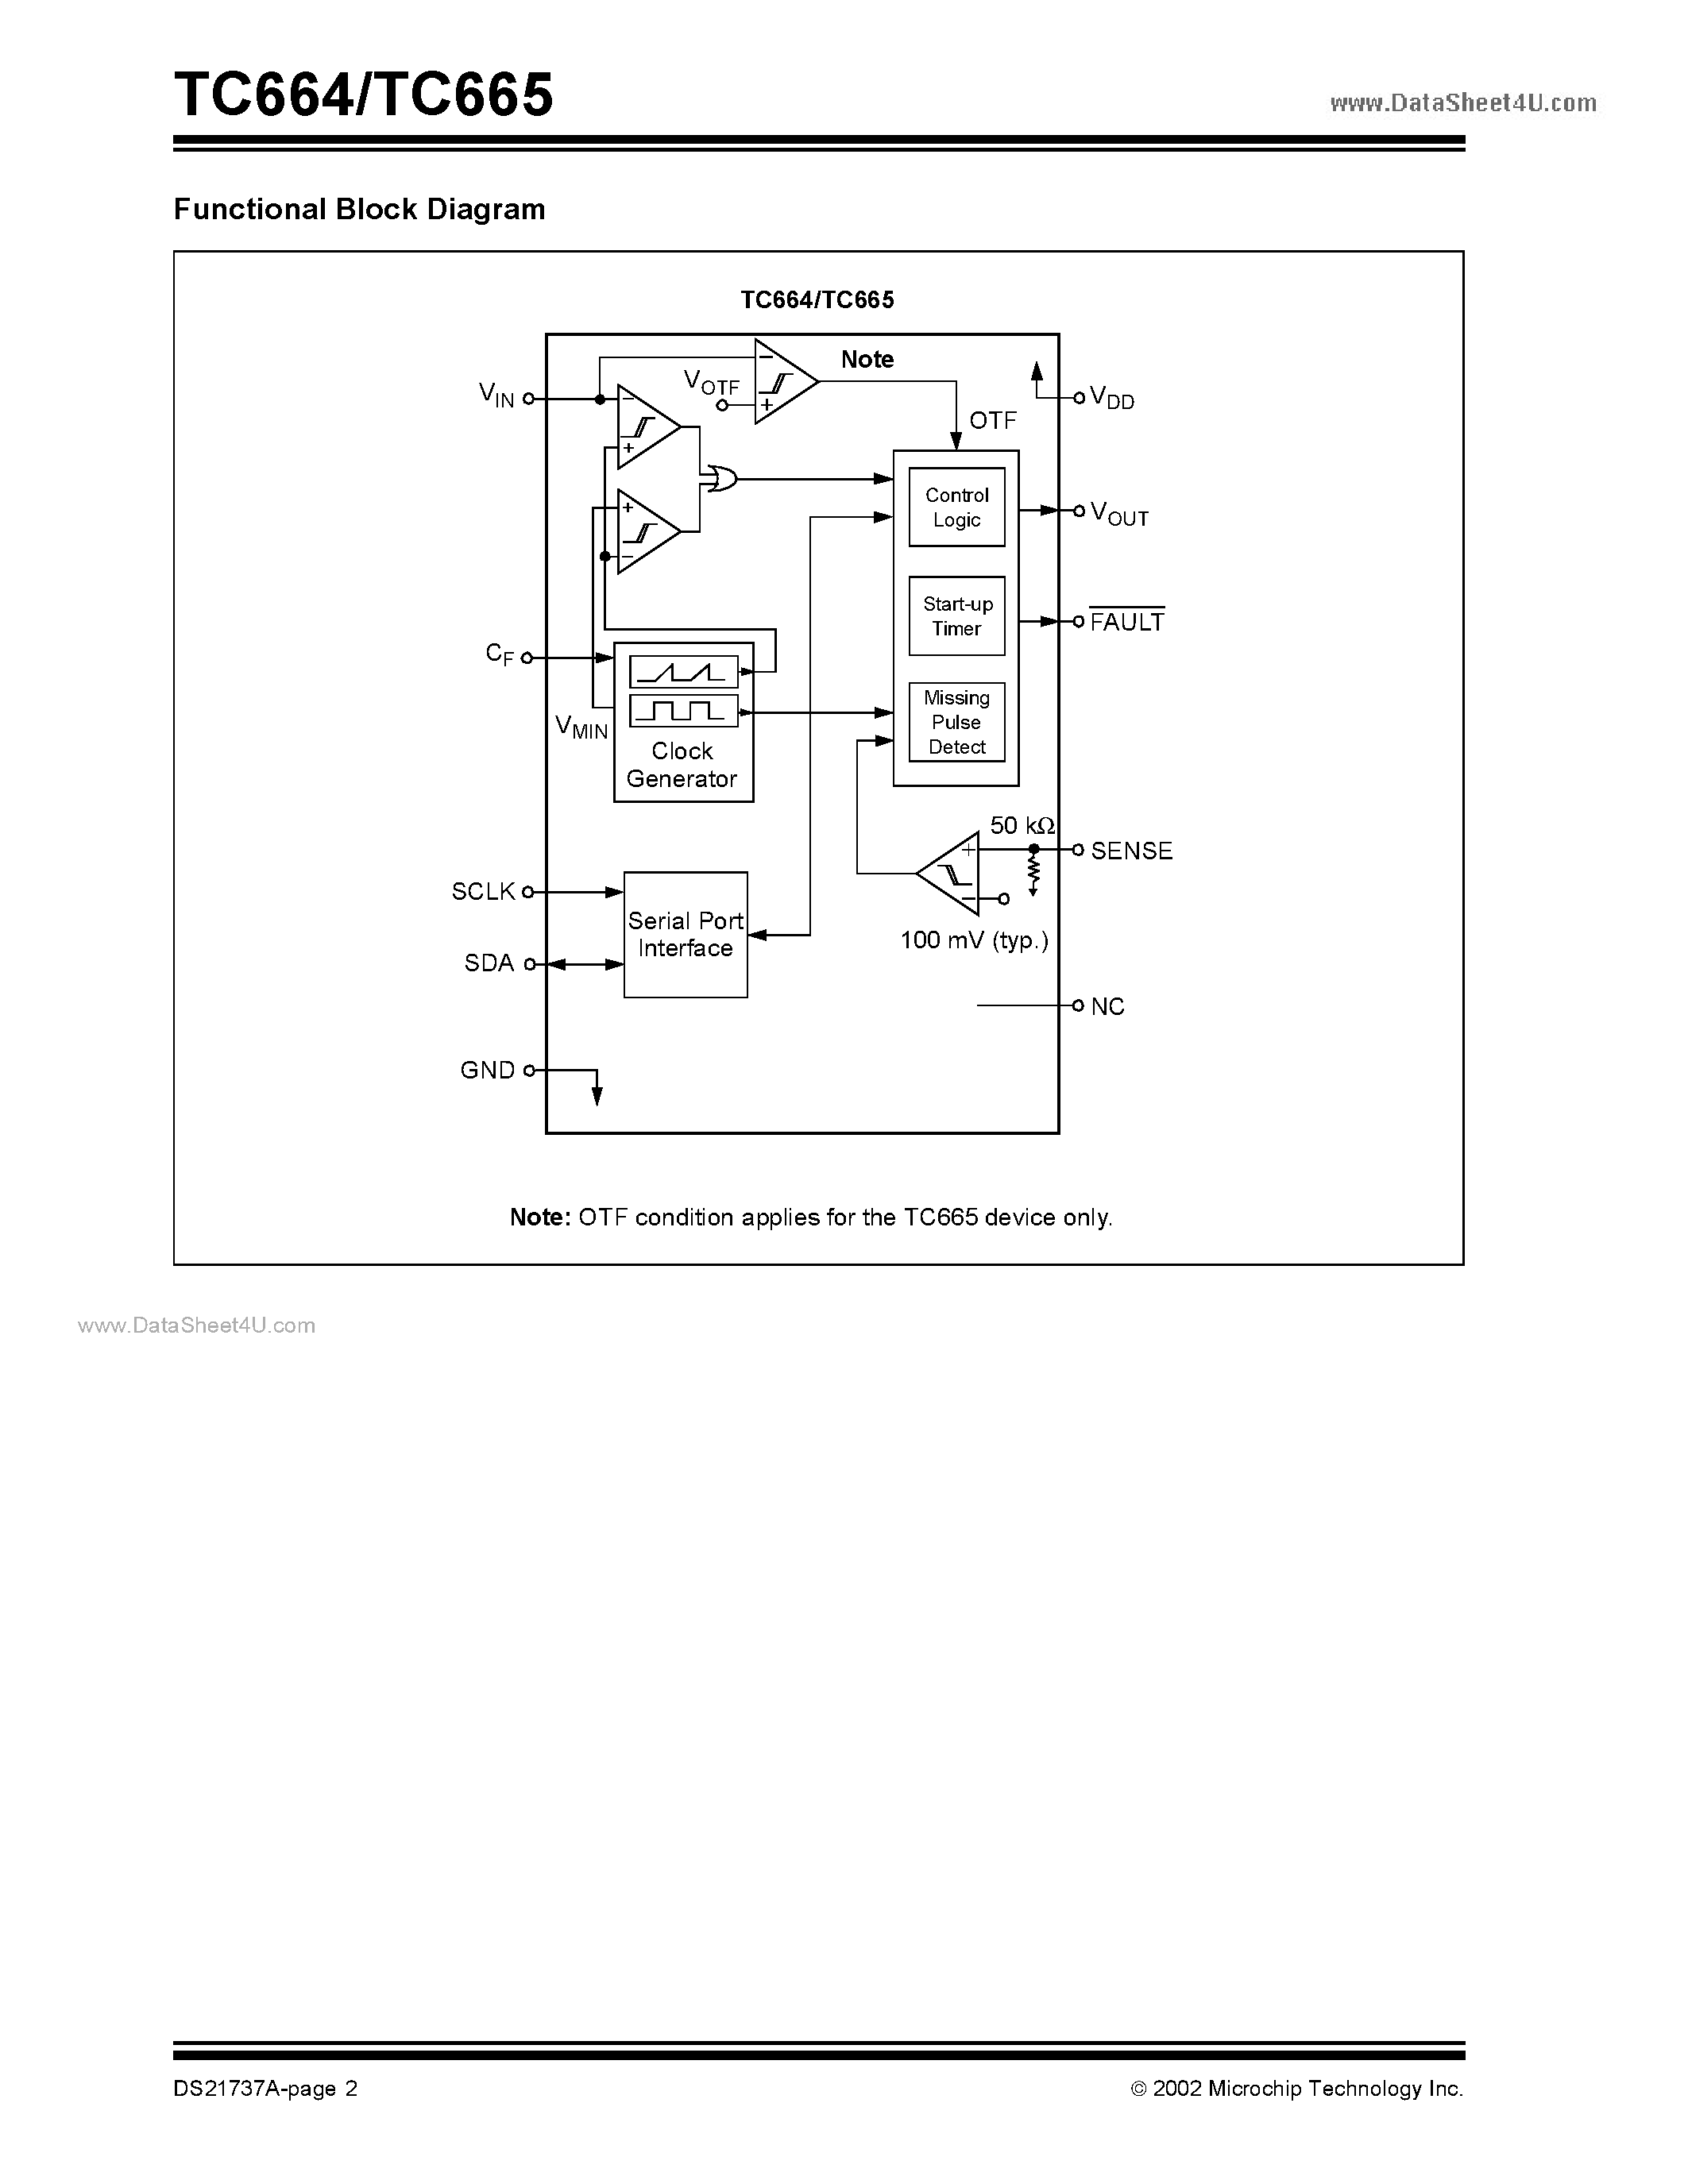 Datasheet TC664 - (TC664 / TC665) PWM Fan Speed Controllers page 2